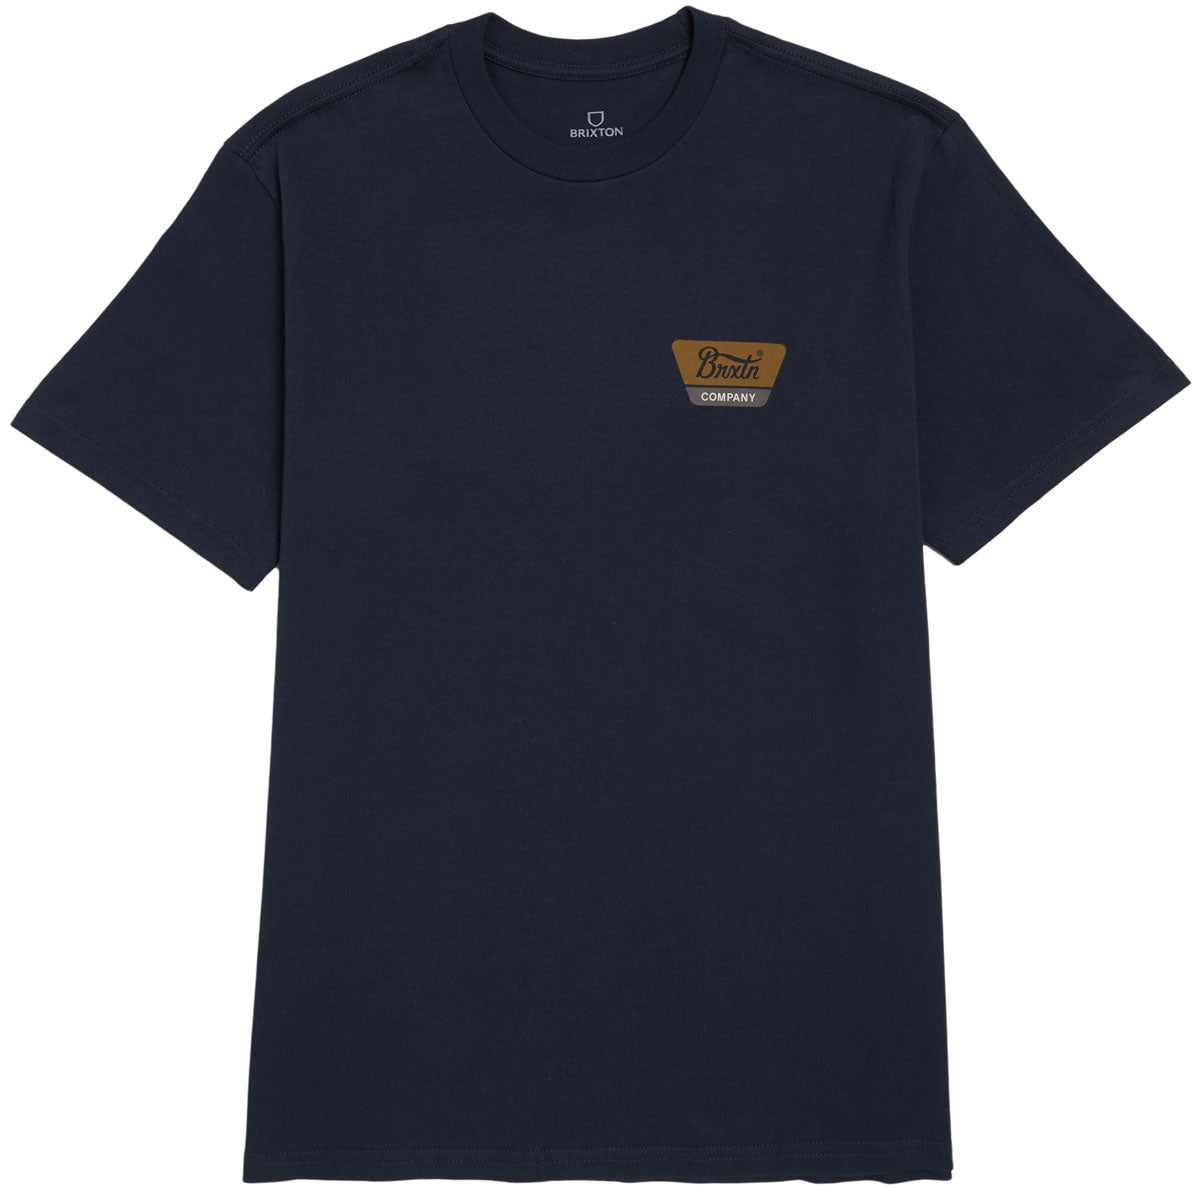 Brixton Linwood T-Shirt - Washed Navy/Golden Brown/Dusk image 1